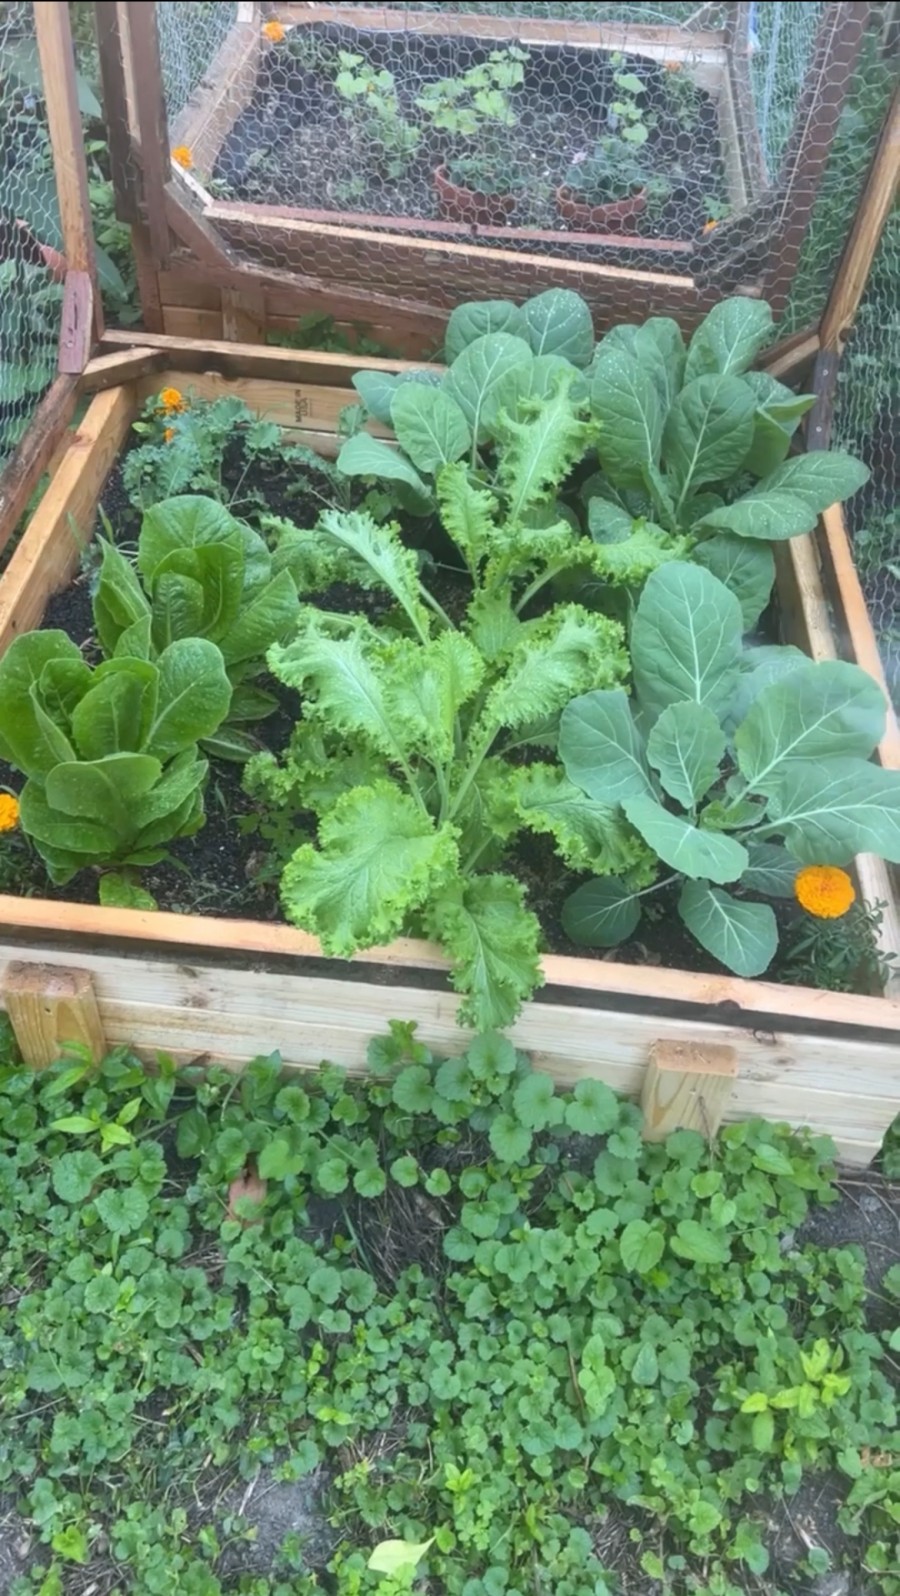 A plot in Ebony Jamison's vegetable garden